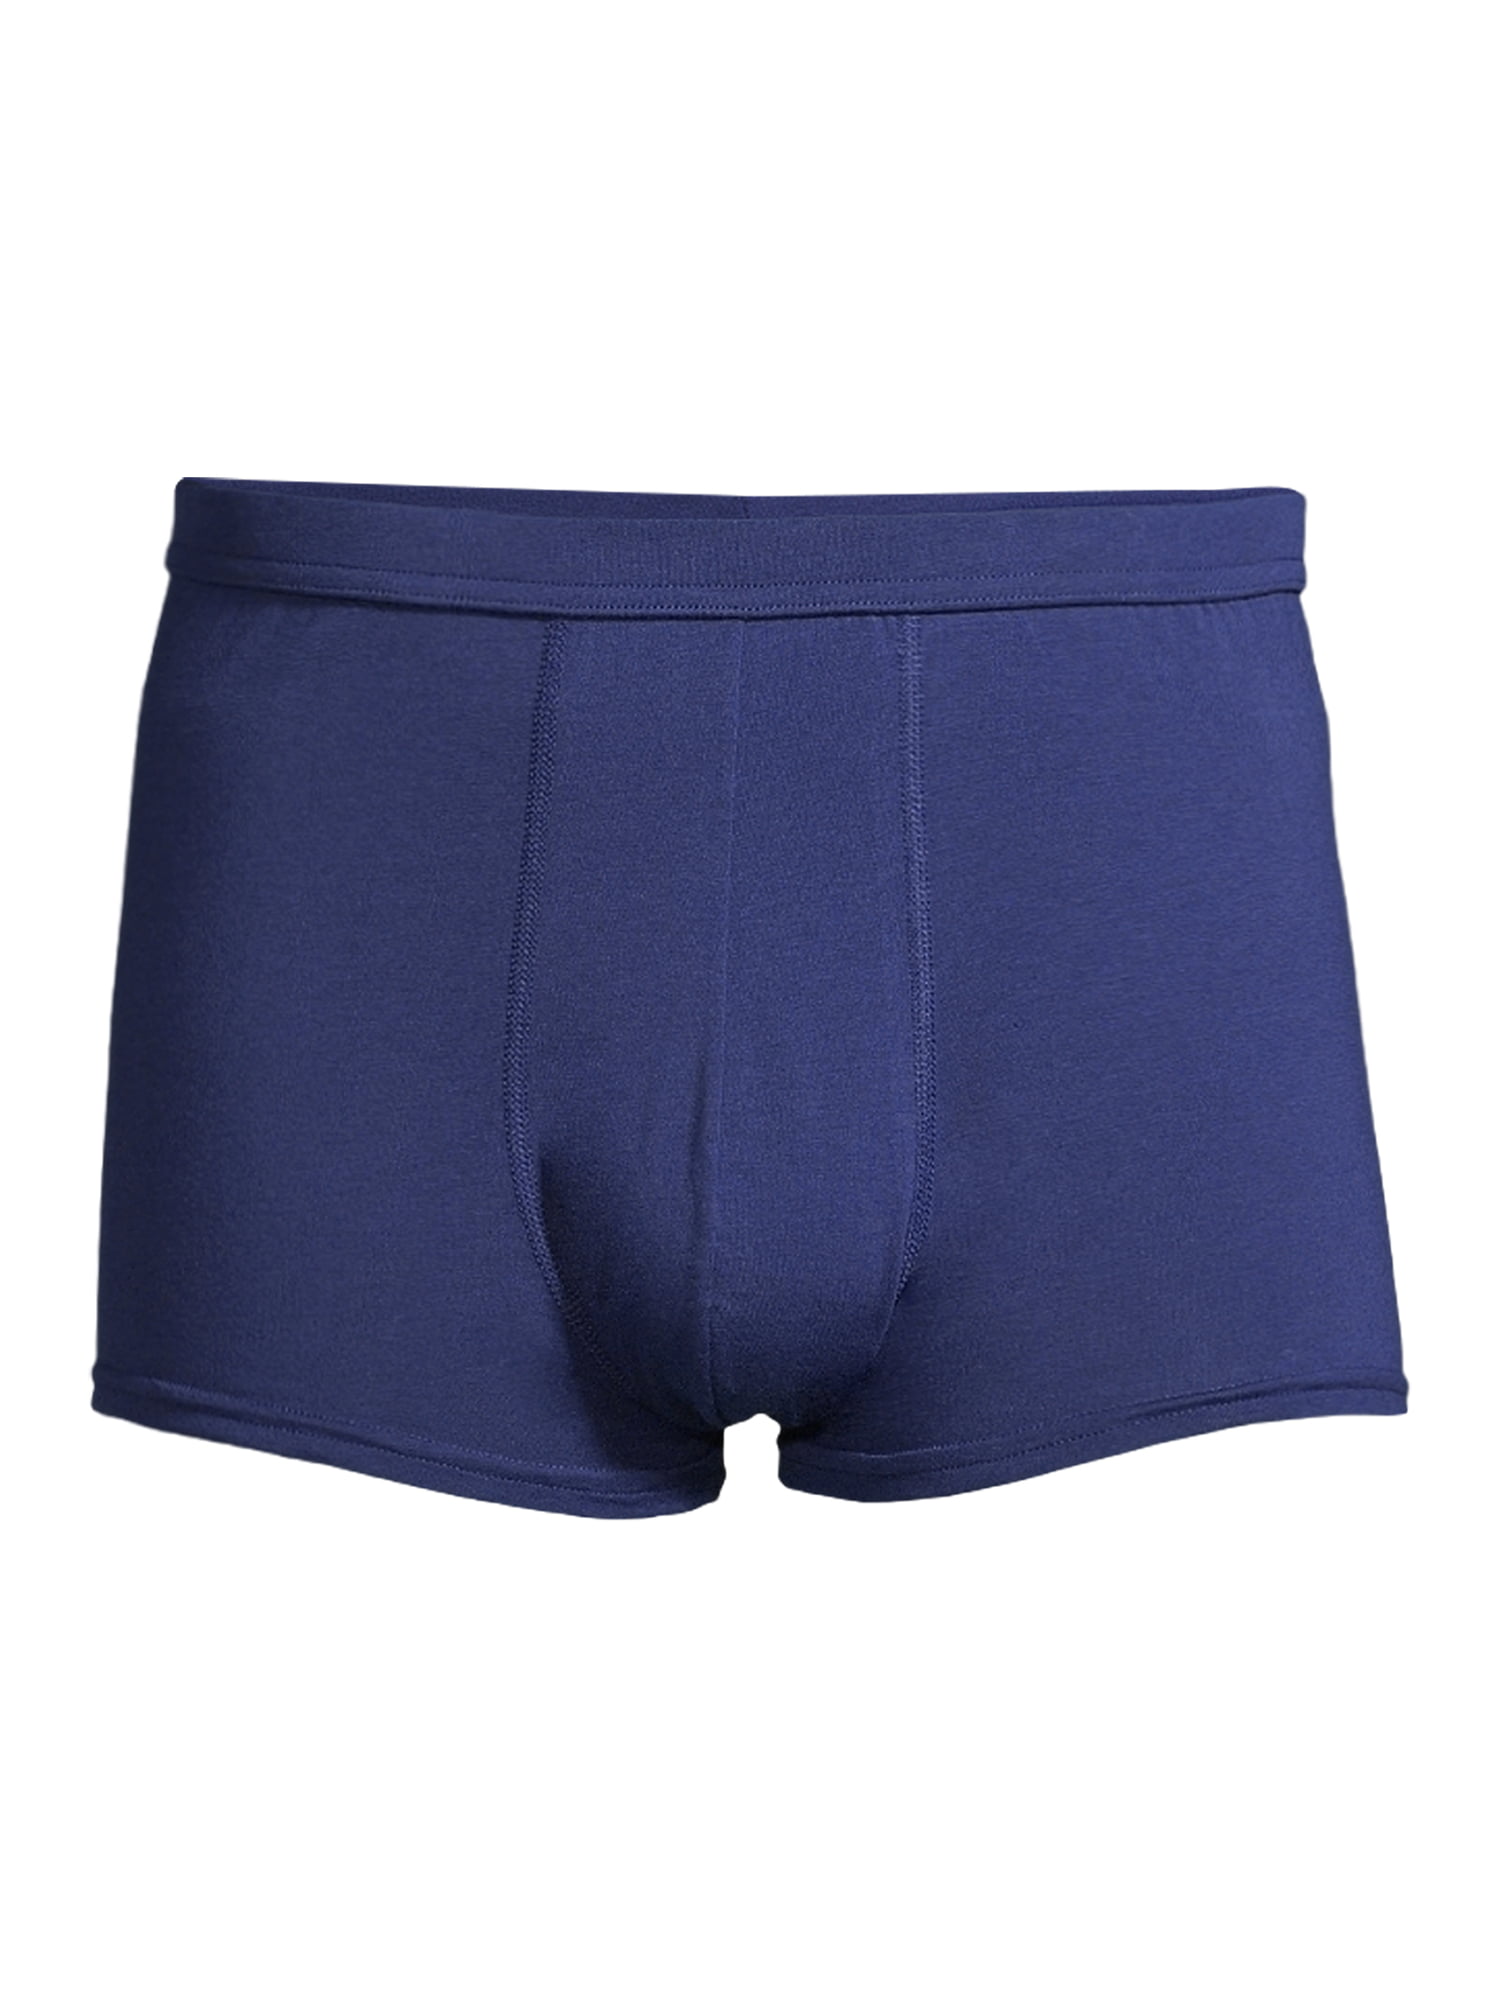 Hanes Men's Comfort Flex Fit Ultra Soft Cotton Stretch Trunks, 3 Pack 